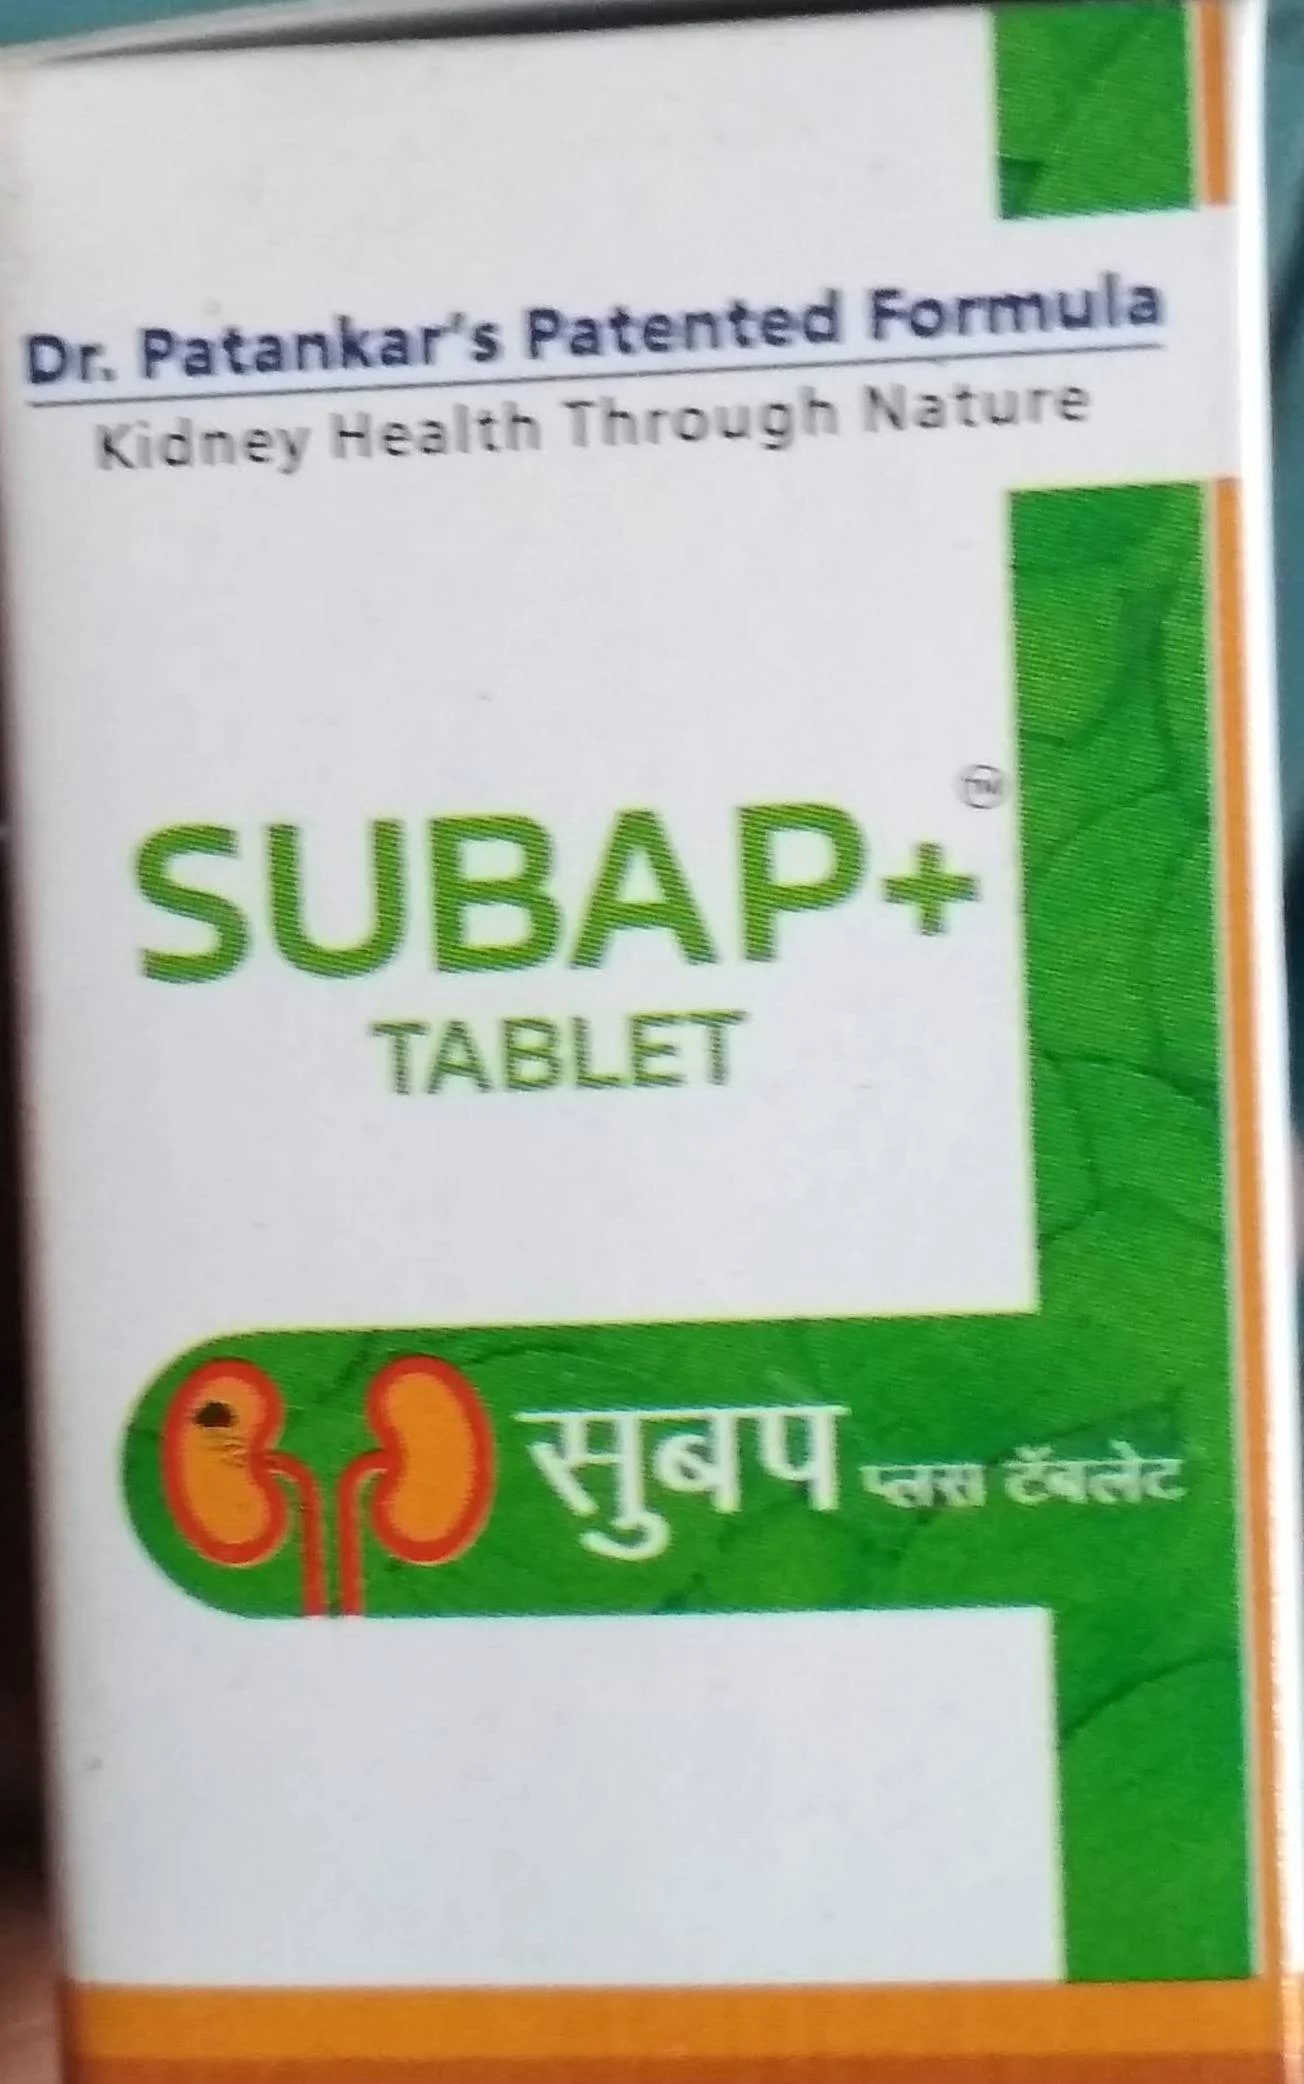 Subap Plus Tablet stonclin 60 Tab Dr. Patankar's Patented